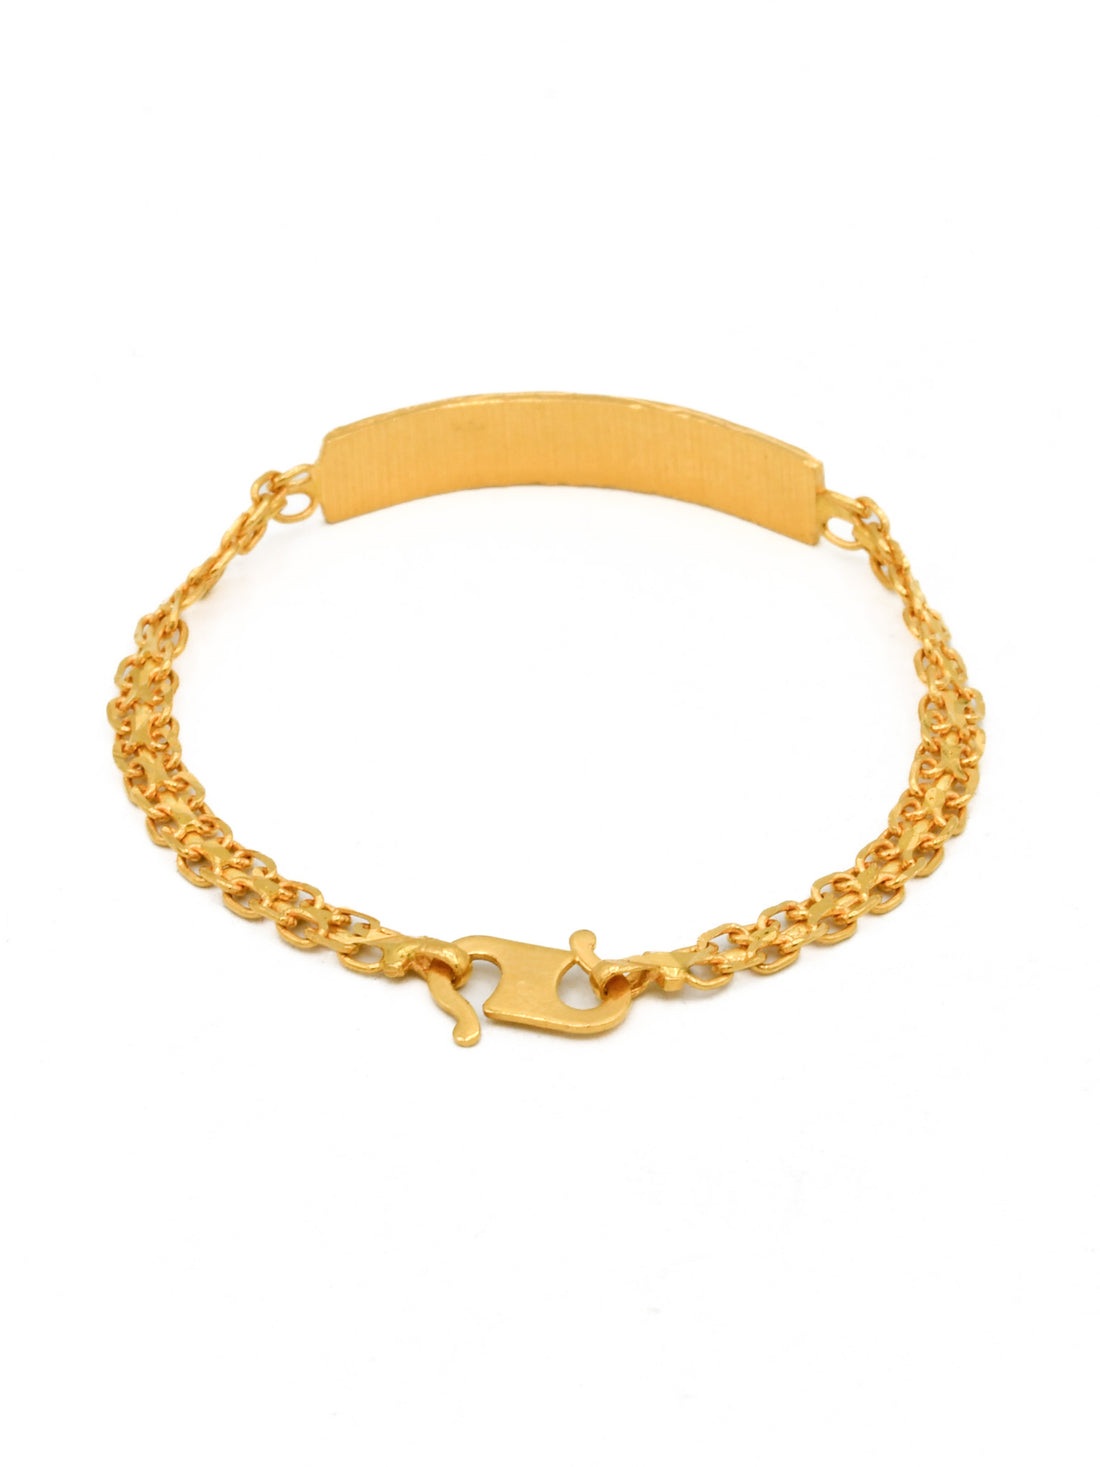 22ct Gold 1 Piece Baby Bracelet